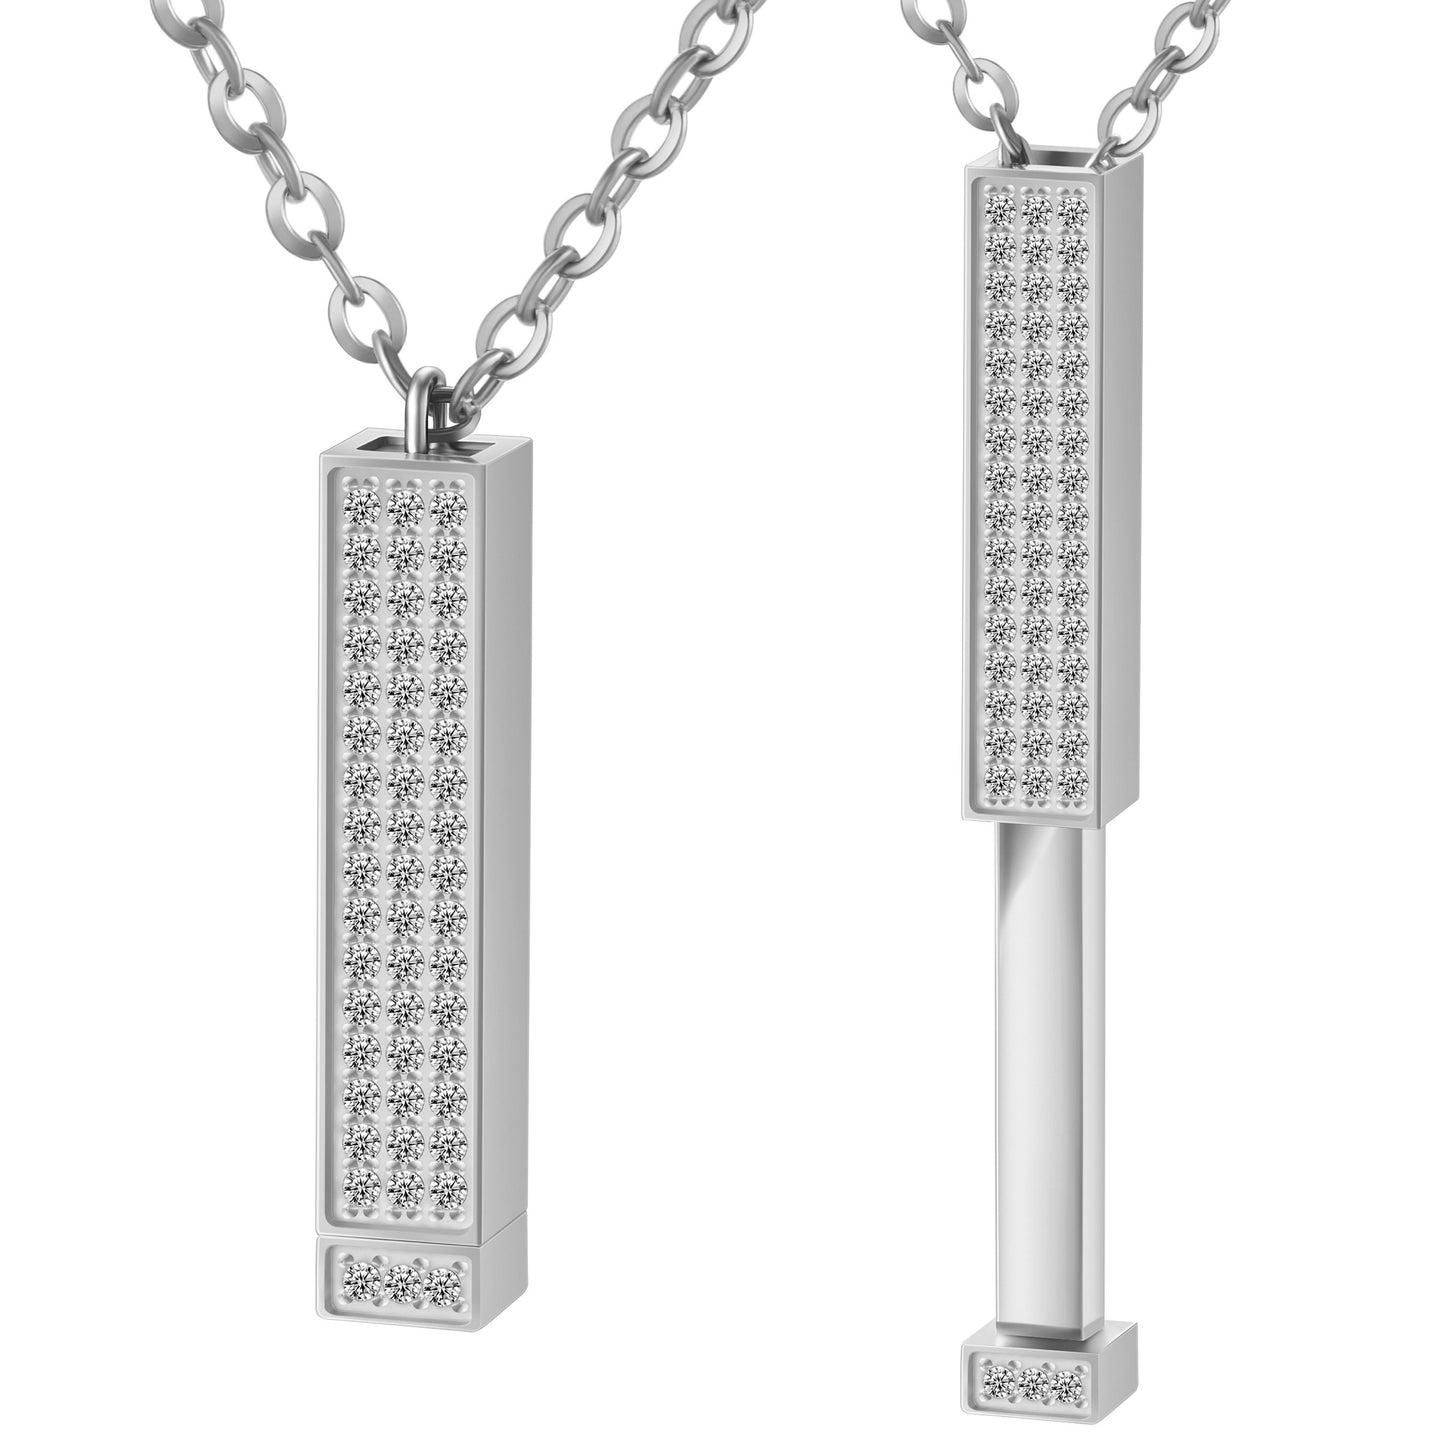 Customizable BDSM hidden pendant in silver with rhinestones